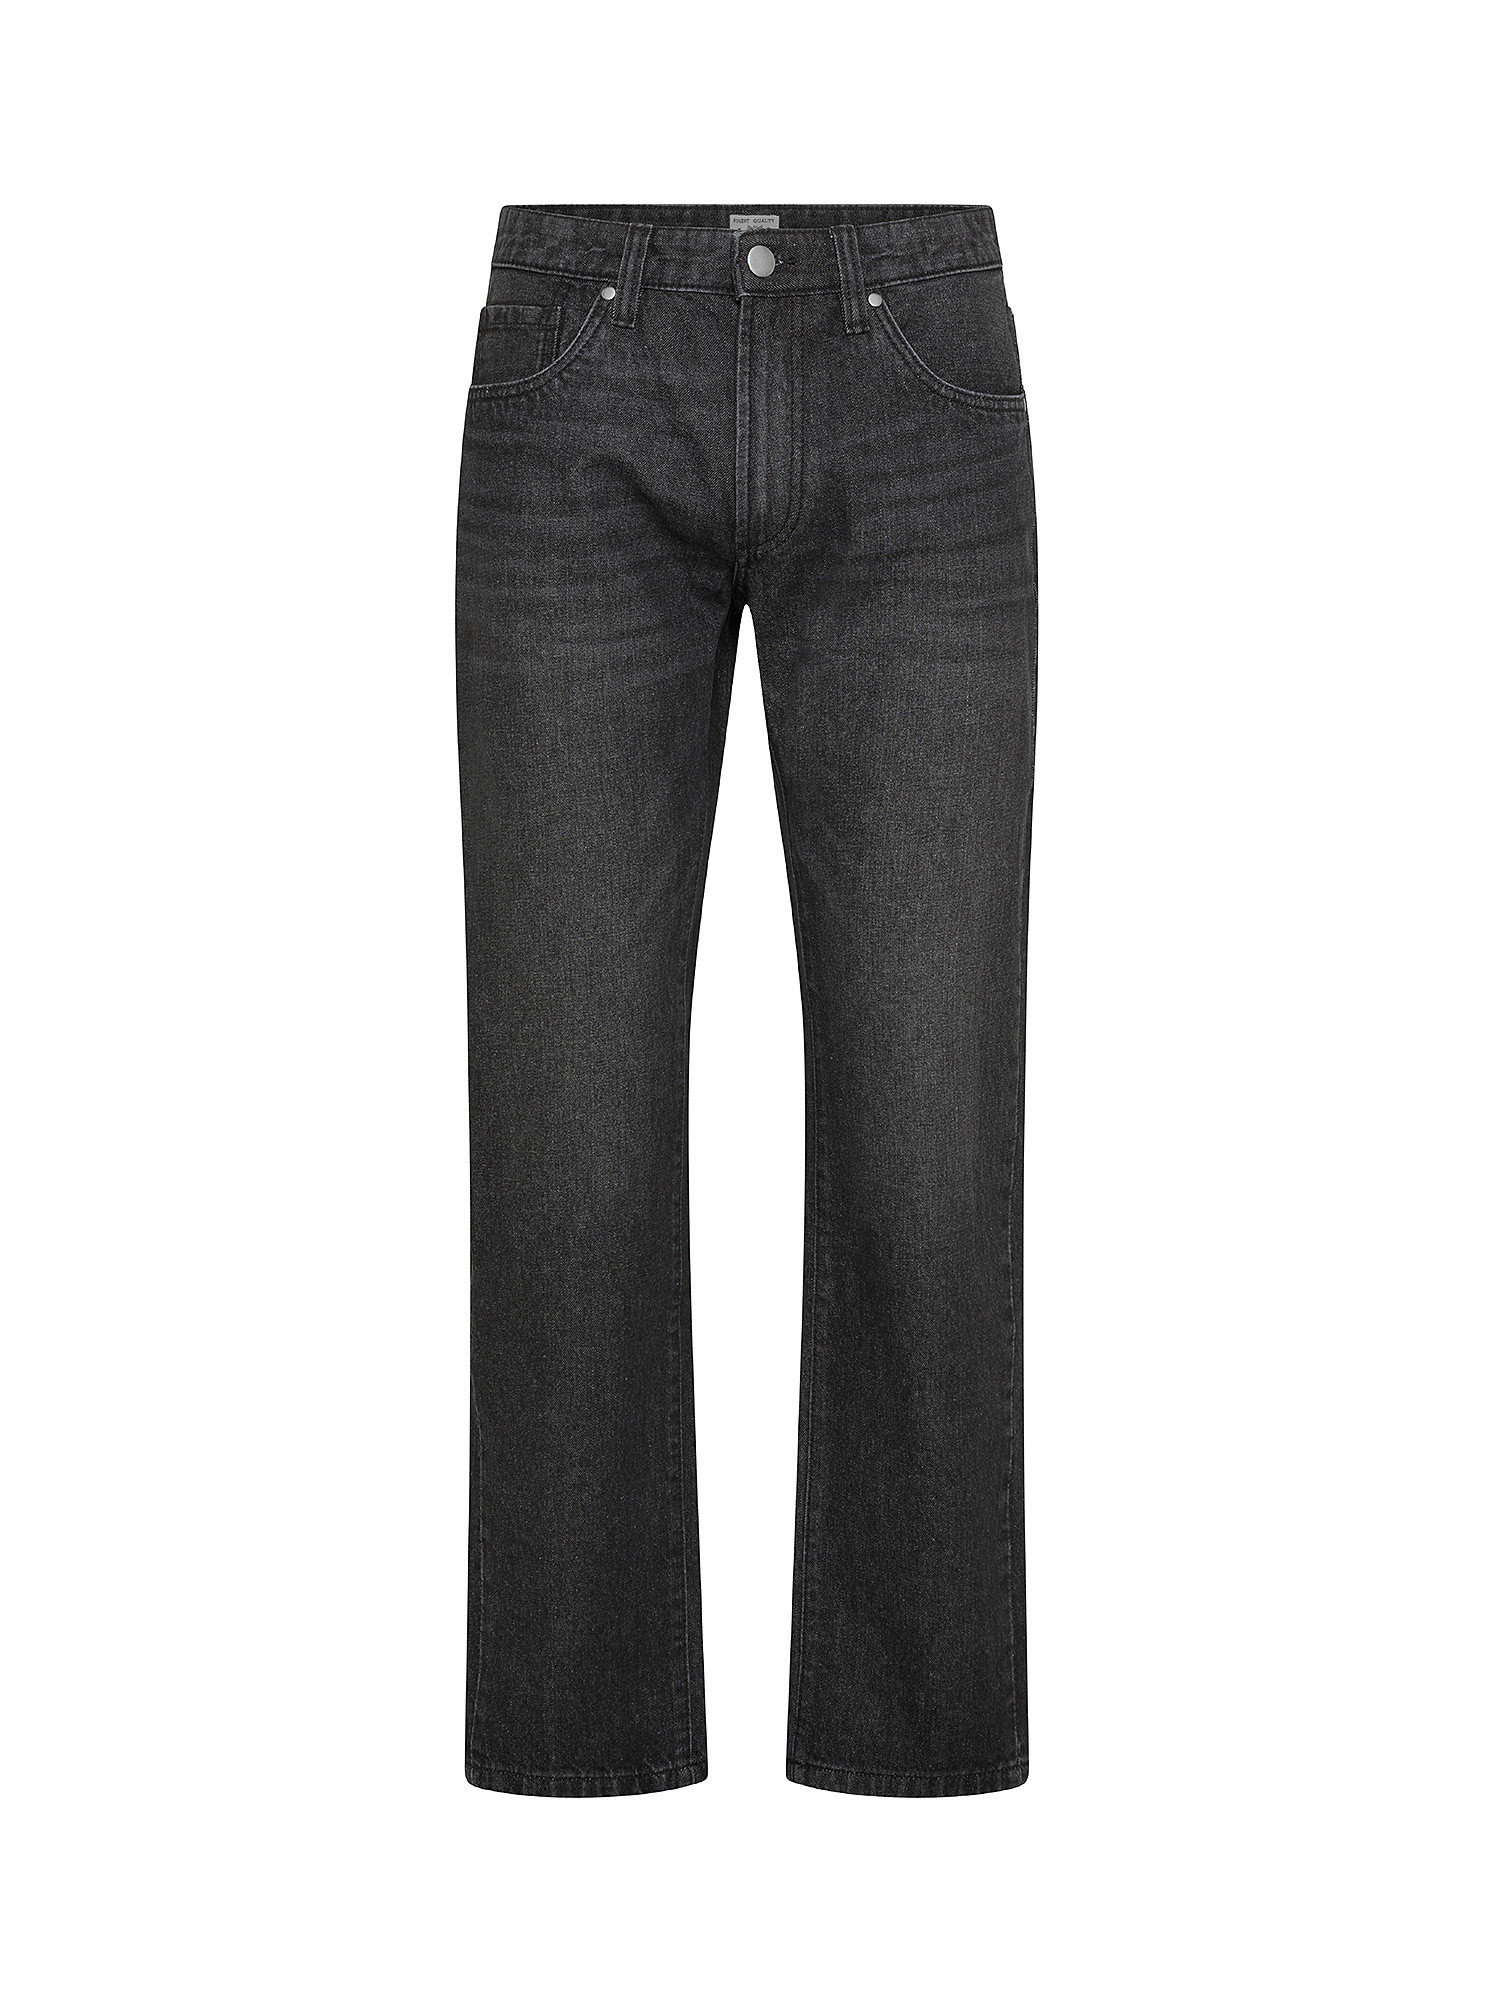 JCT - Five pocket jeans in pure cotton, Black, large image number 0